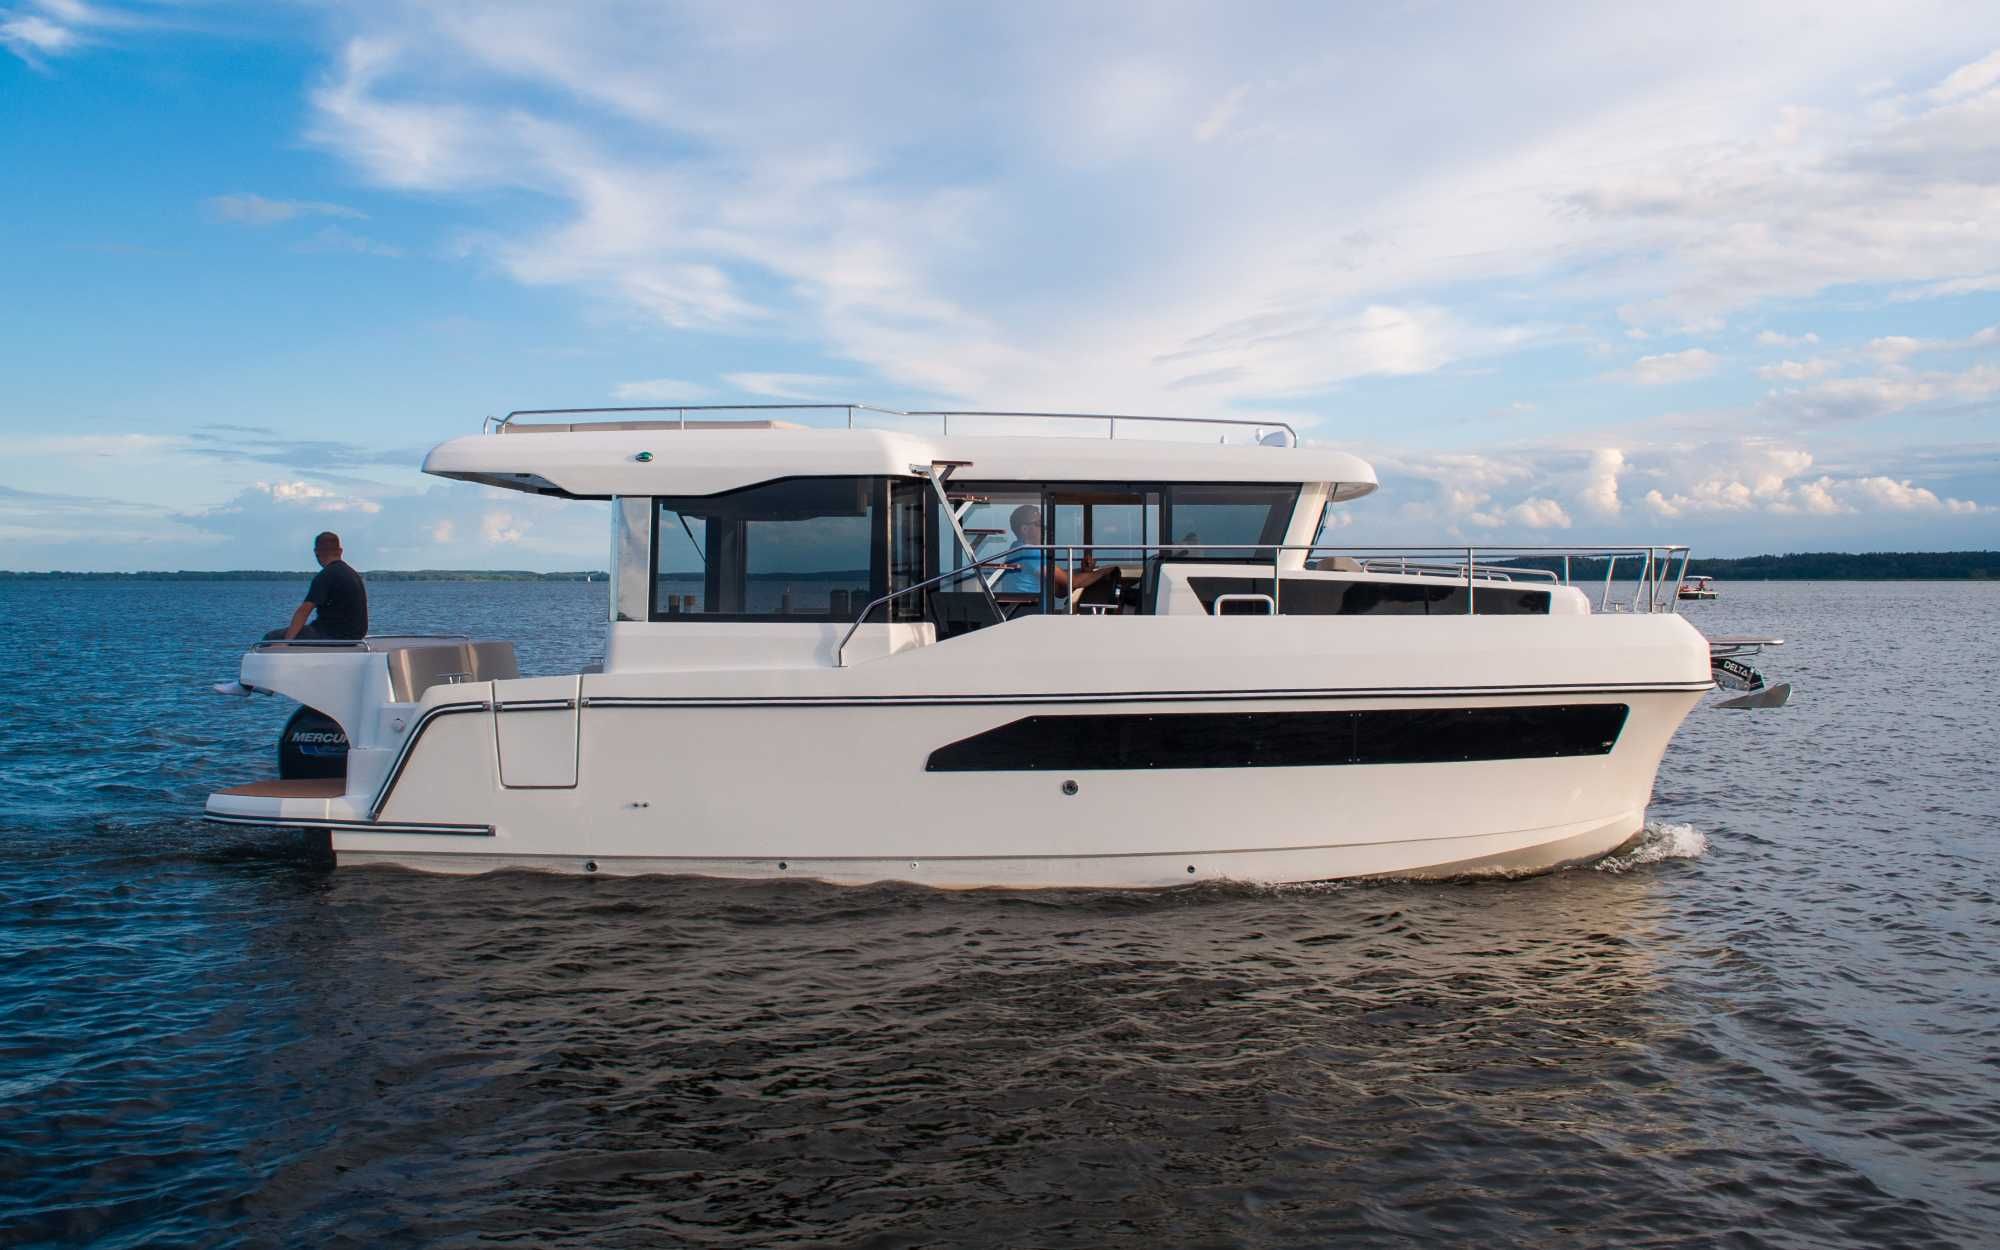 Jacht motorowy Lamdo Yachts LY30+ Houseboat nowy